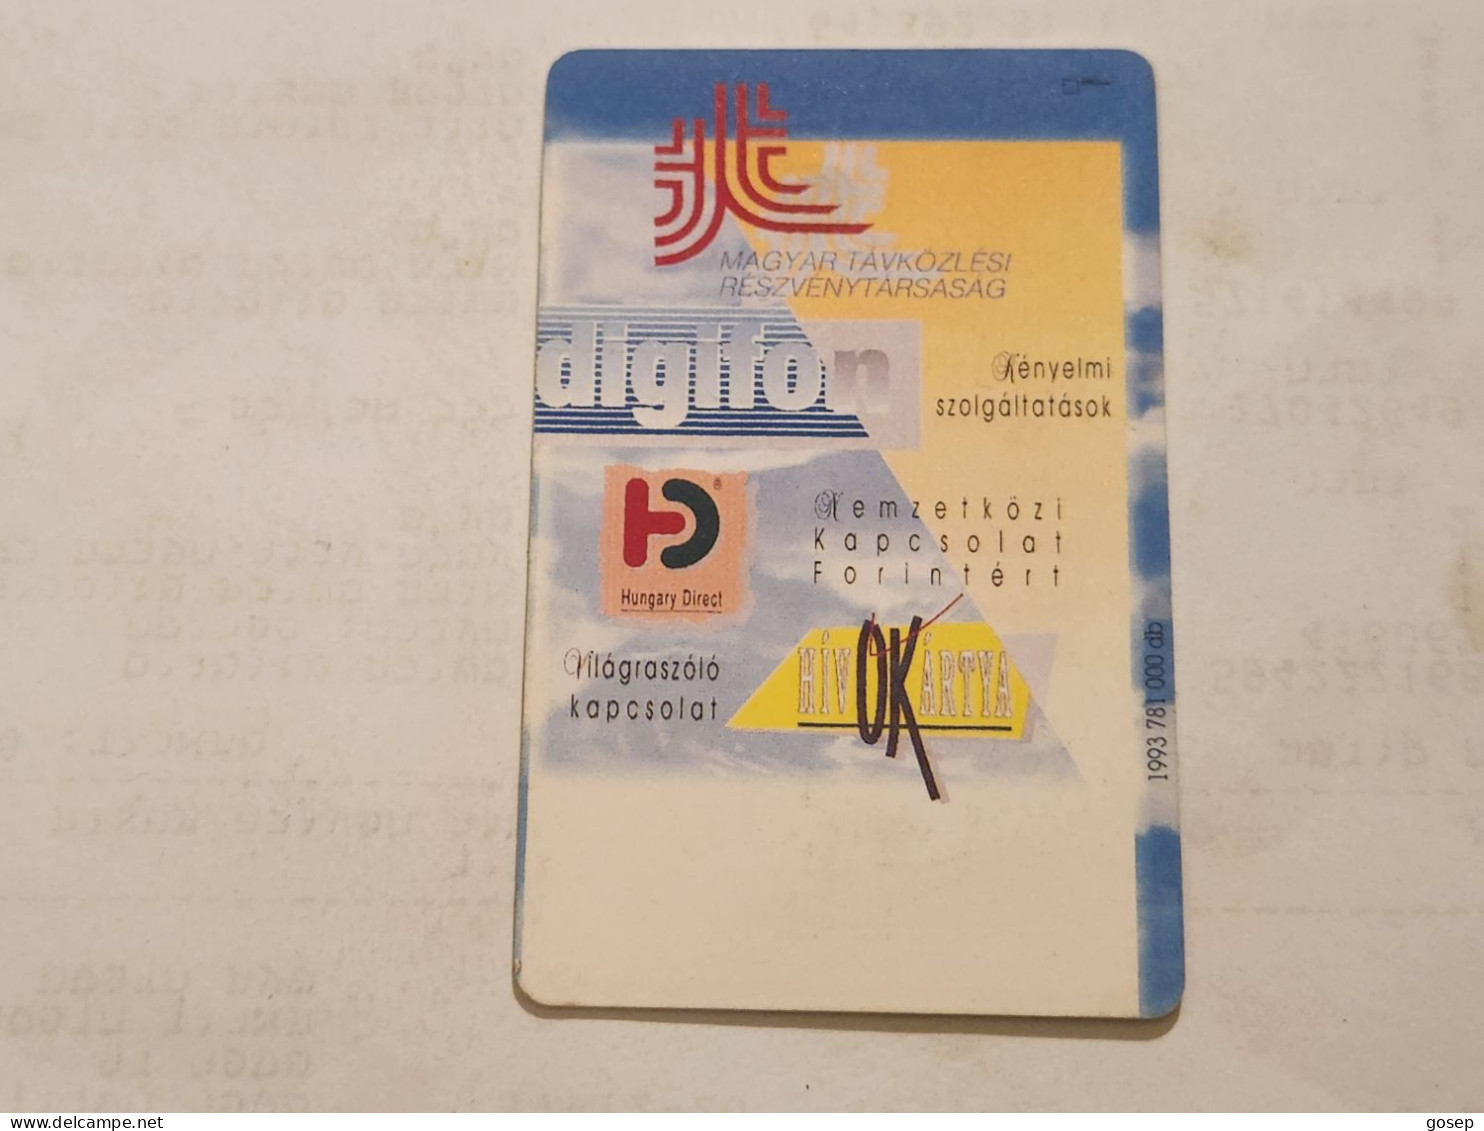 HUNGARY-(HU-P-1993-32Aa)-MATAV-(177)(500units)(11/93)(tirage-781.000)-USED CARD+1card Prepiad Free - Hungary